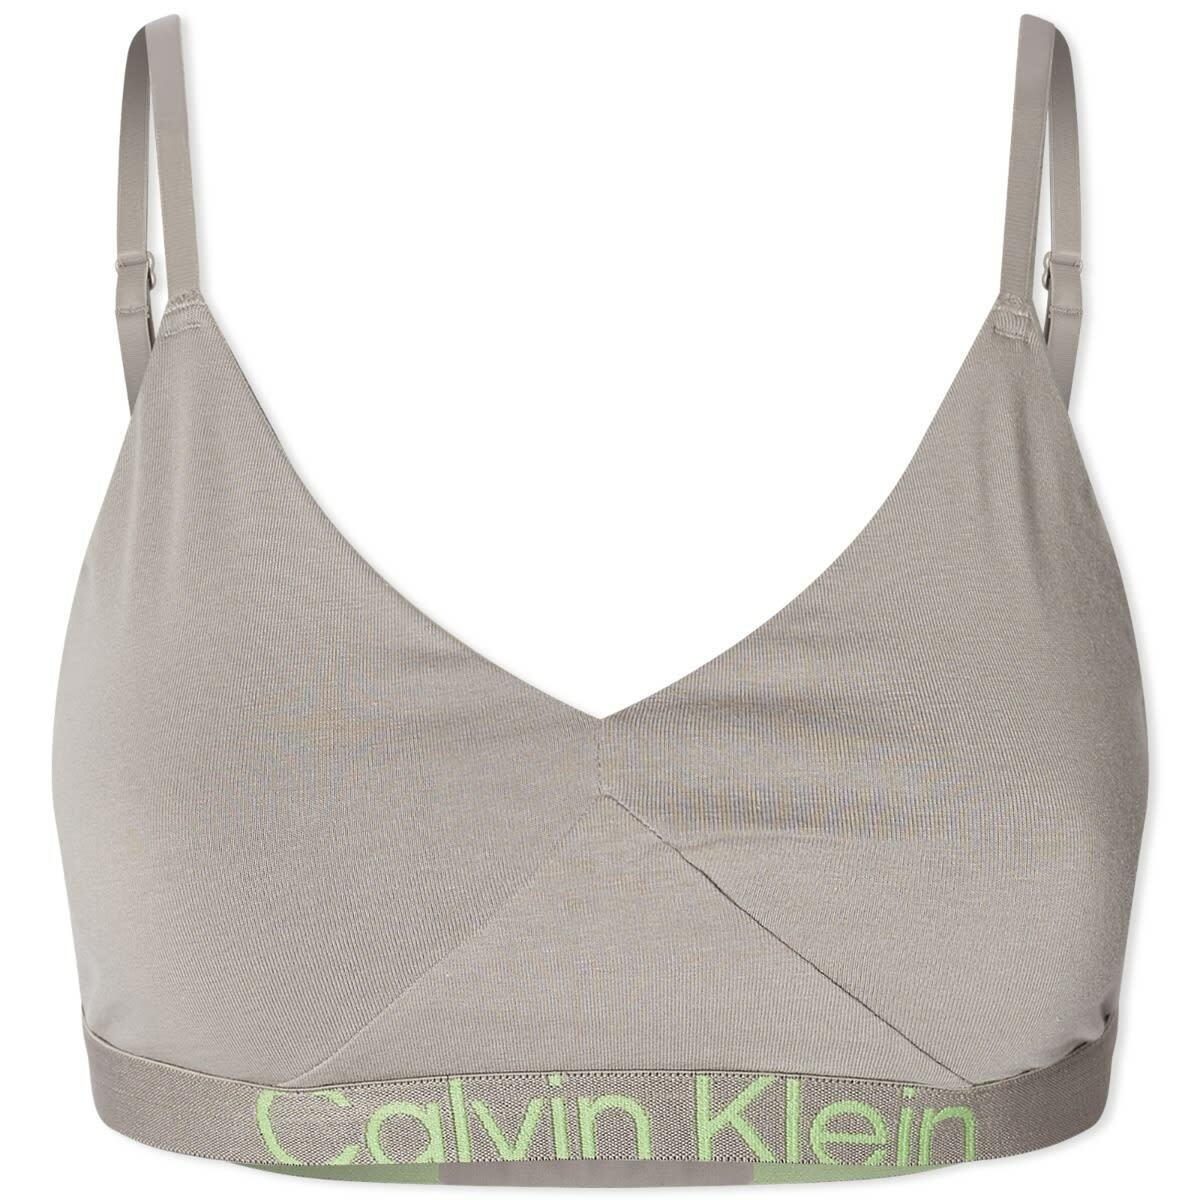 Calvin Klein Eco Cotton Unlined Triangle Bra Grey Heather